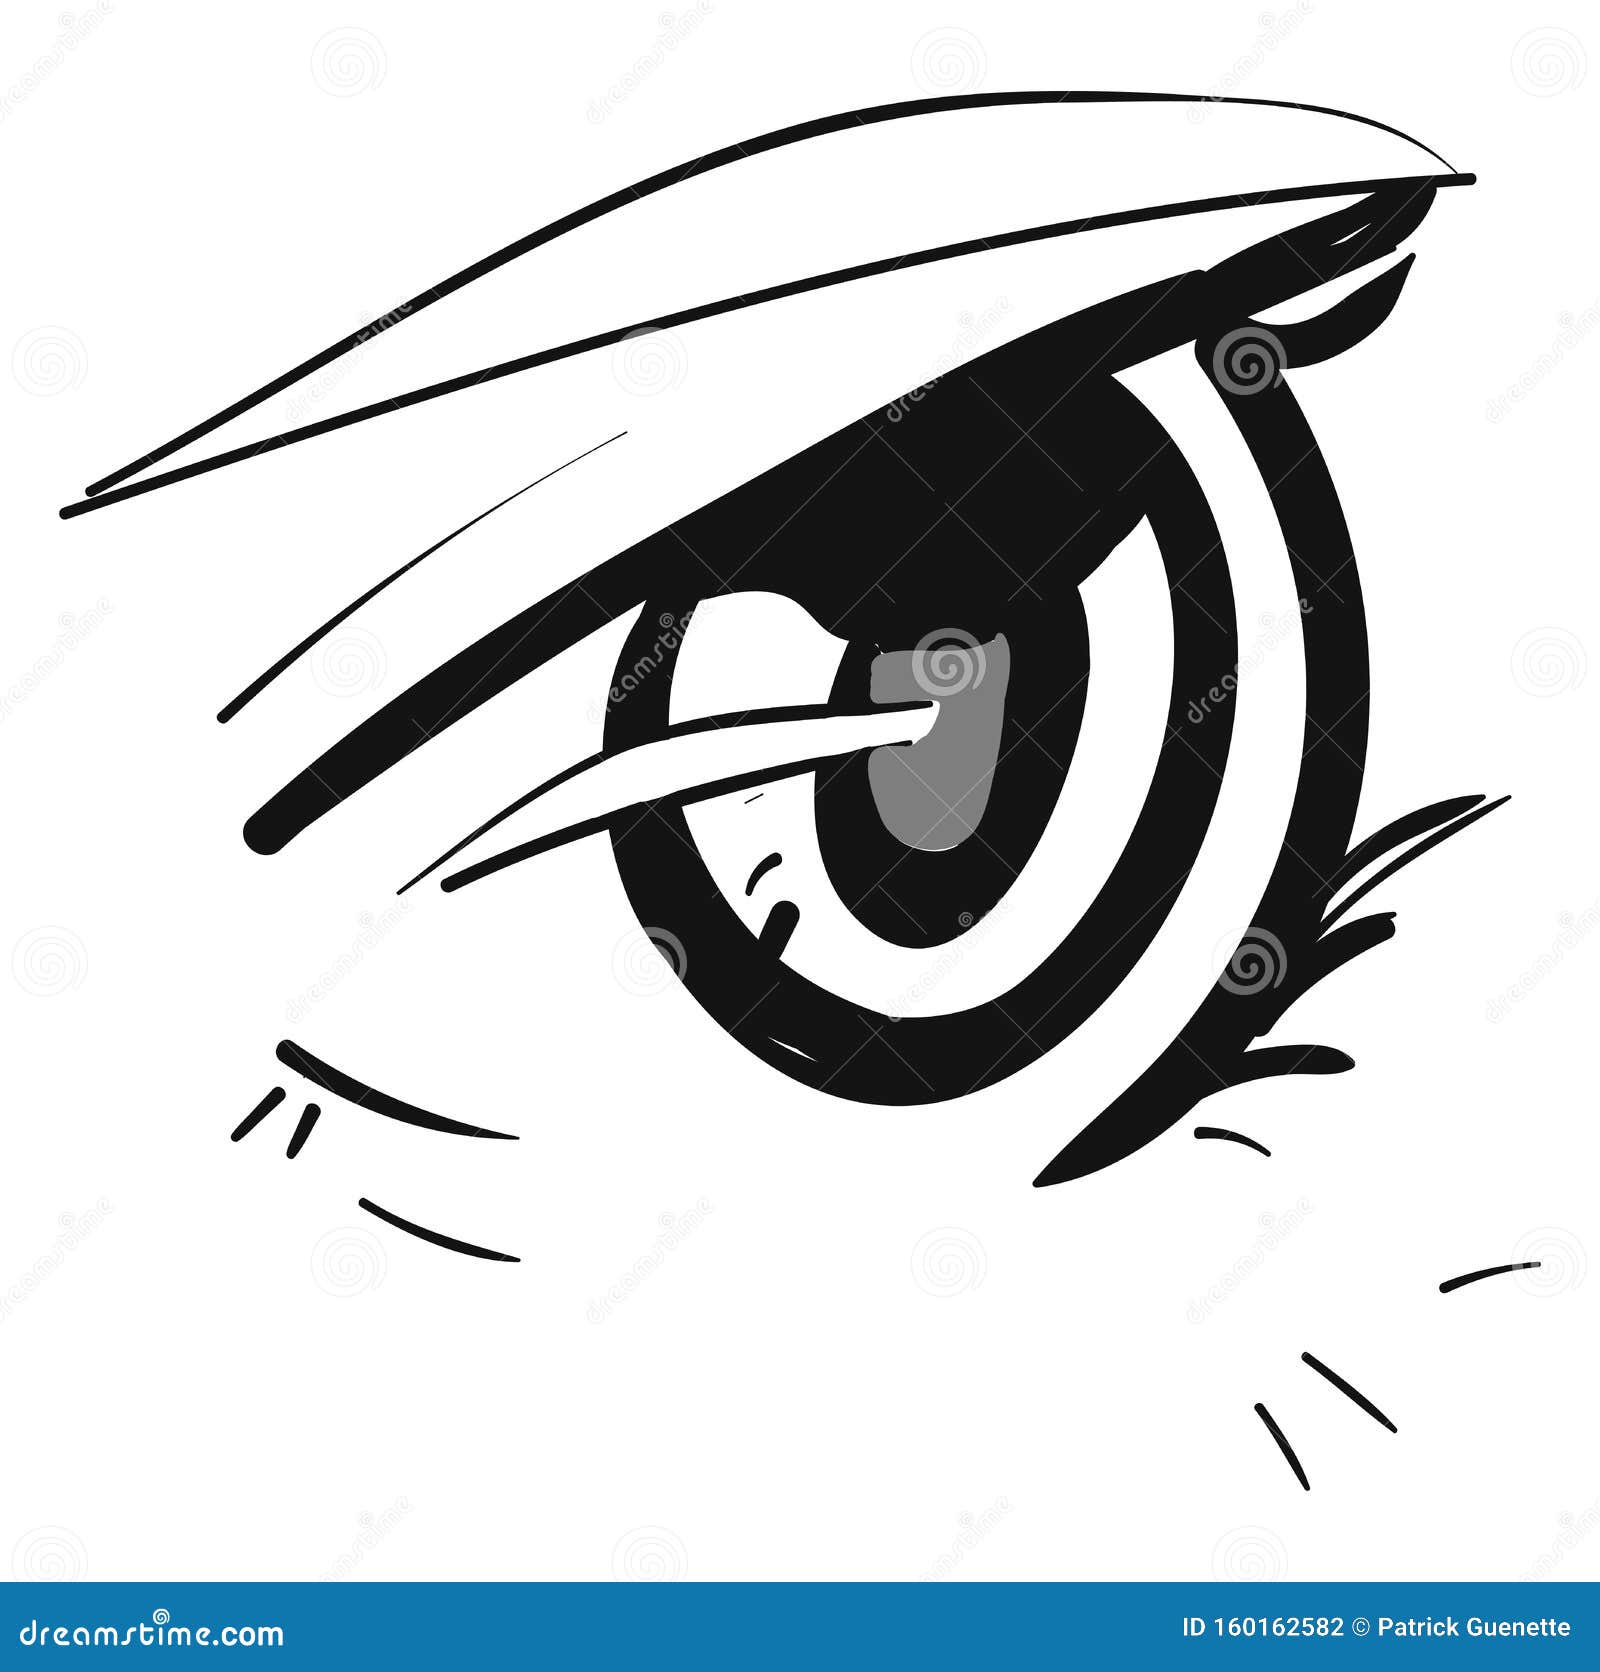 Free: Eyes illustration, Anime Font, Black big eyes diagram